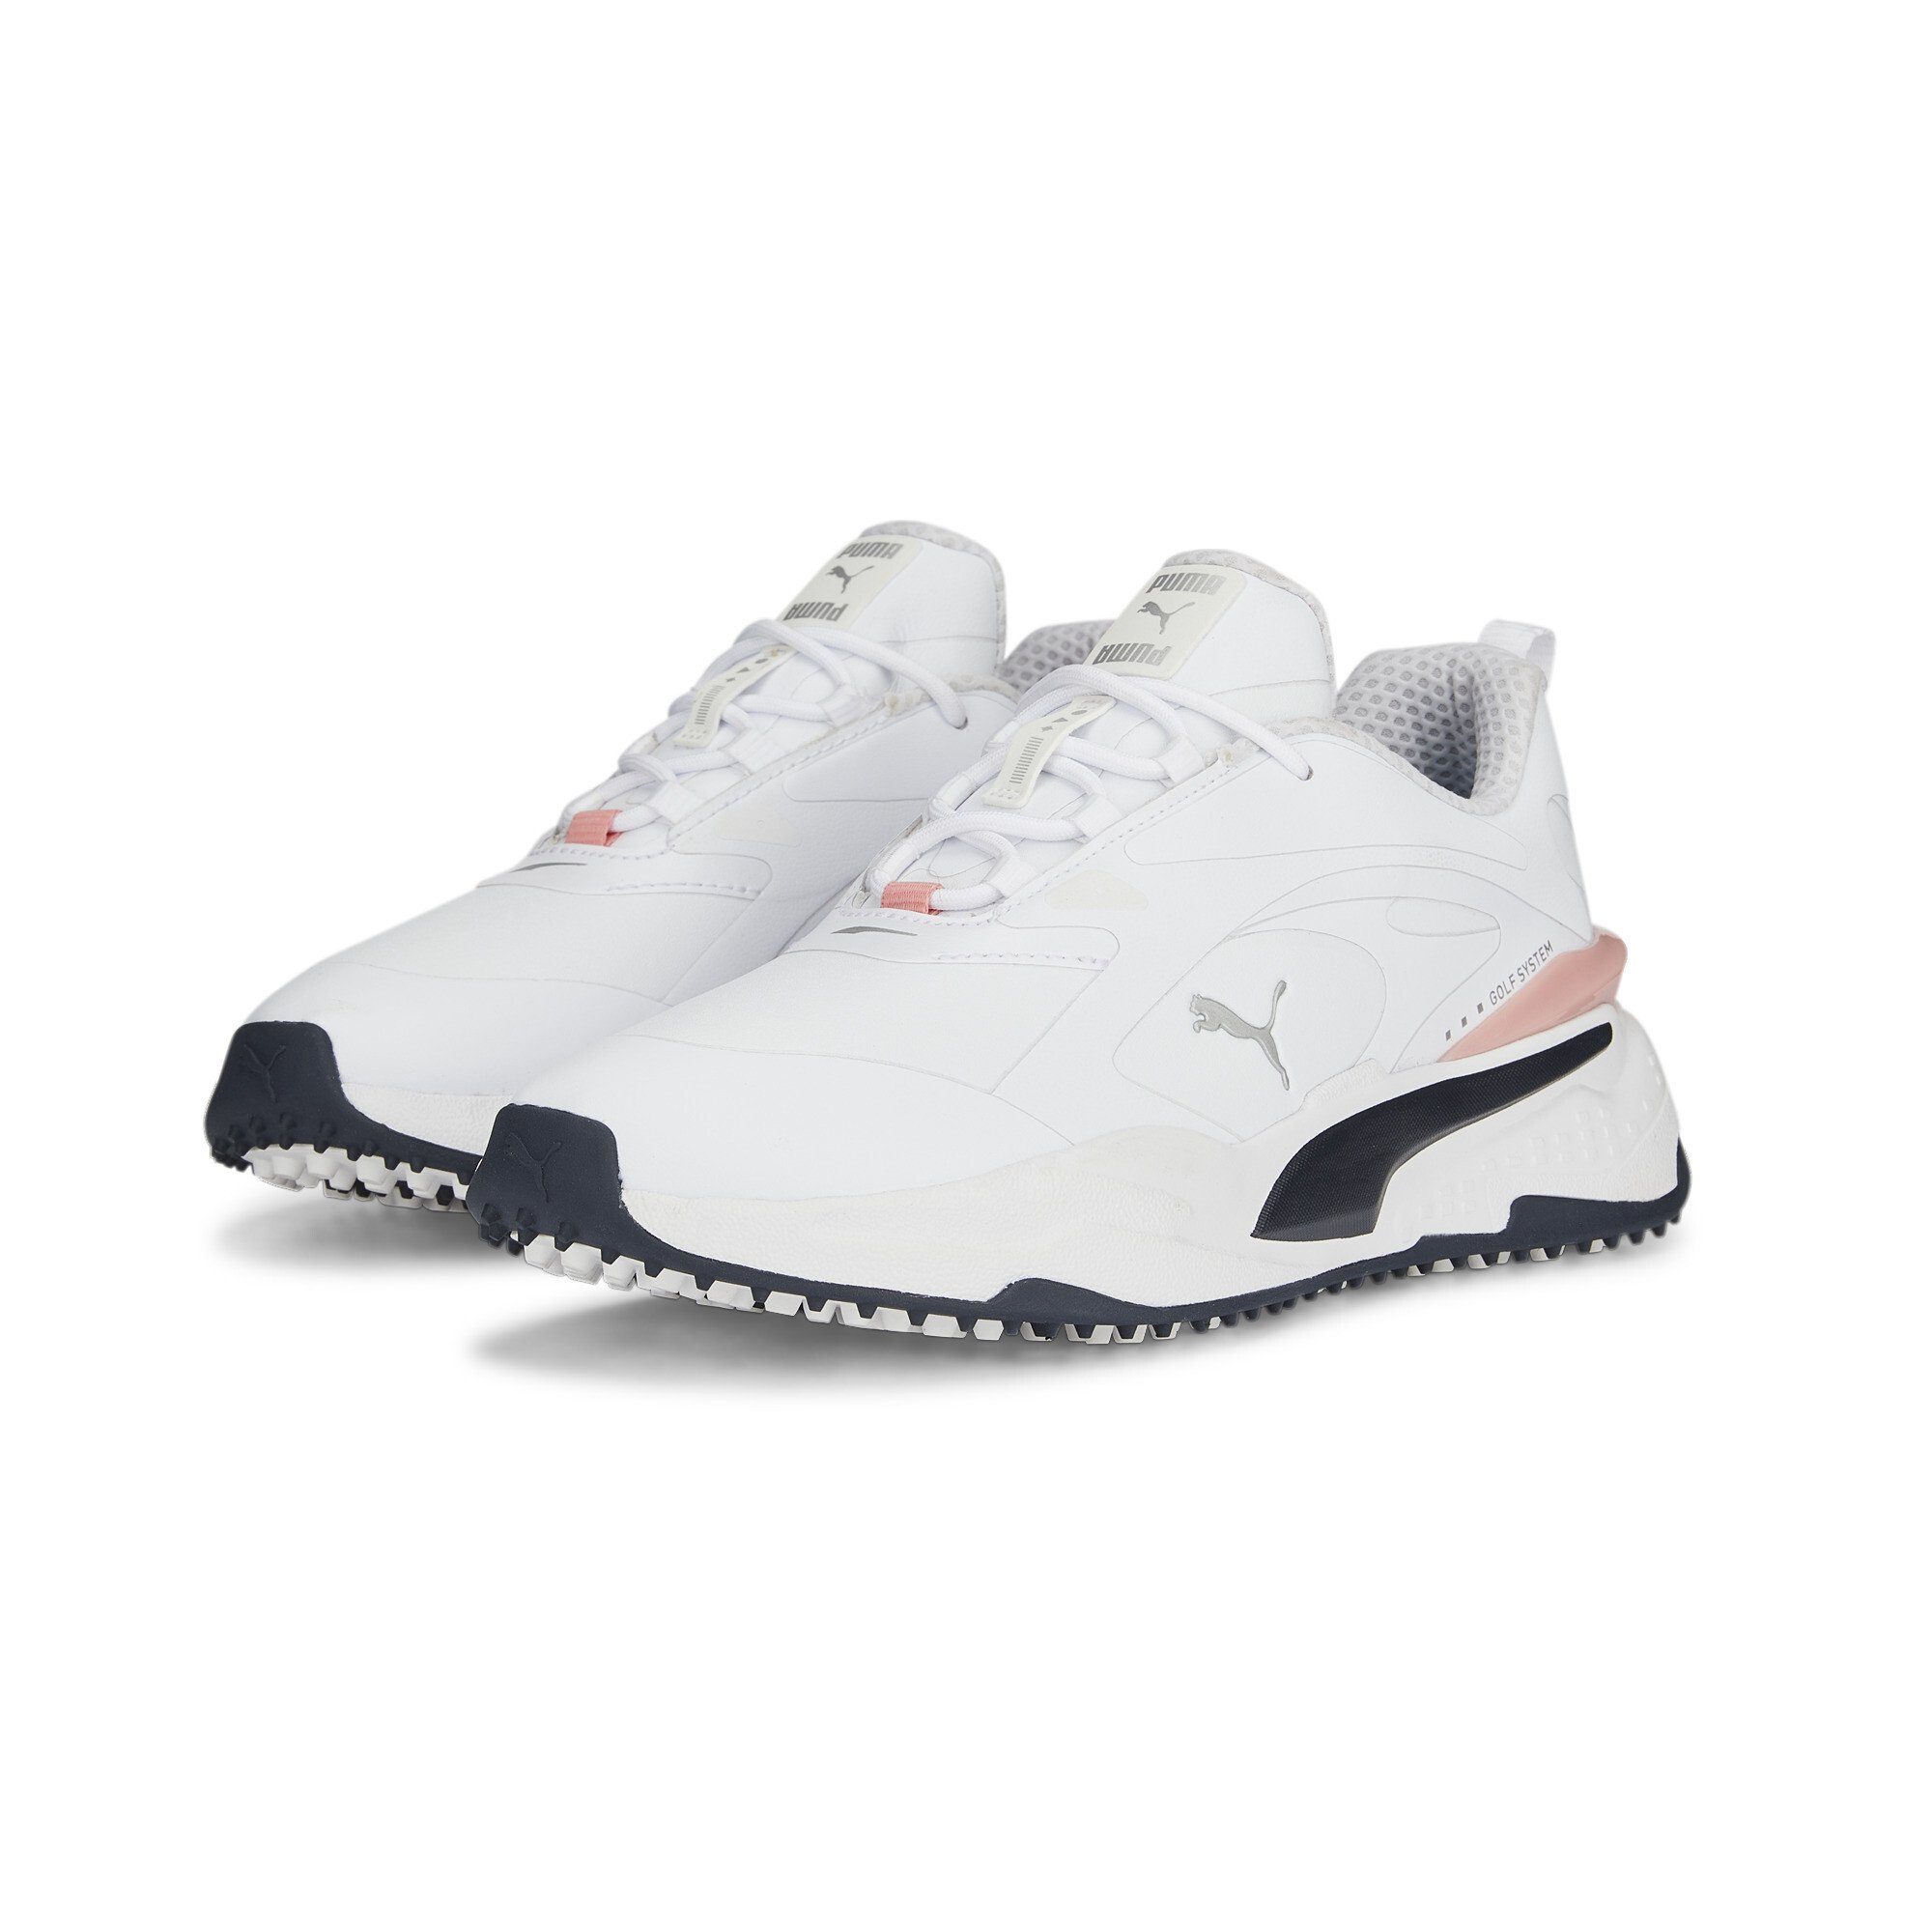 PUMA »GS-Fast Damen-Golfschuhe« Sneaker online kaufen | OTTO